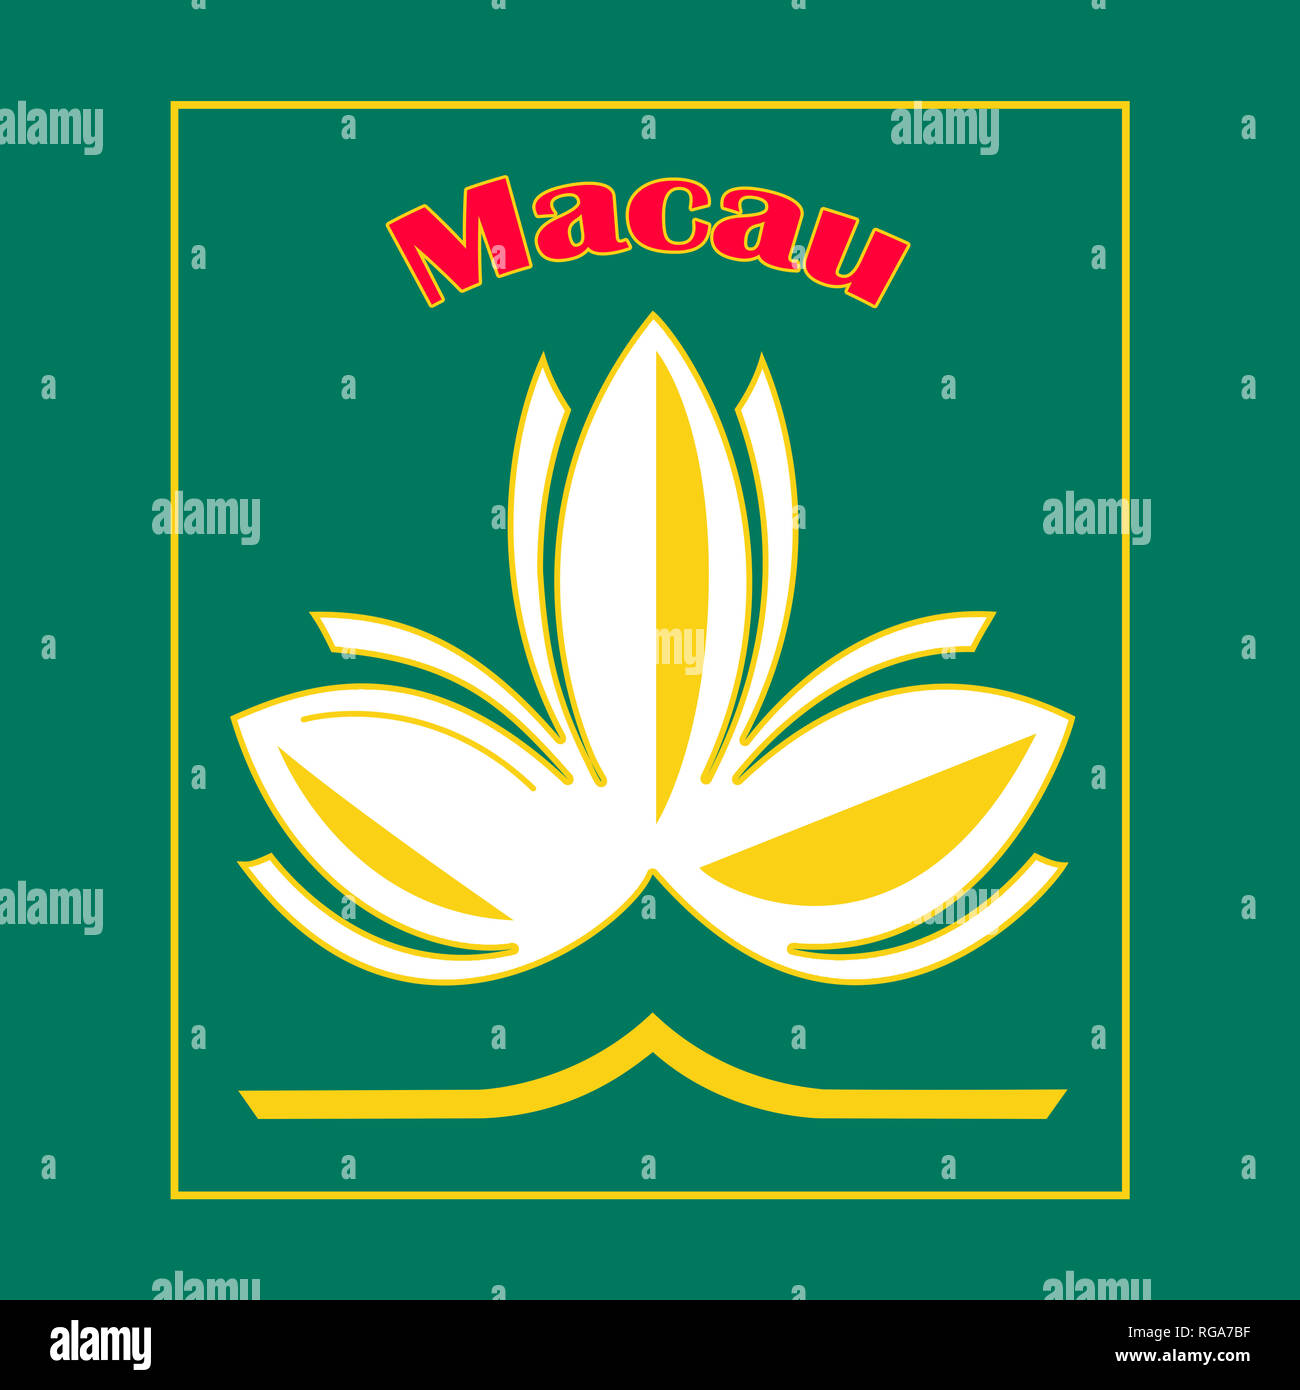 Lotus flower and red Macau inscription. Idea for the fridge souvenir magnet, stamp or sticker label Stock Photo